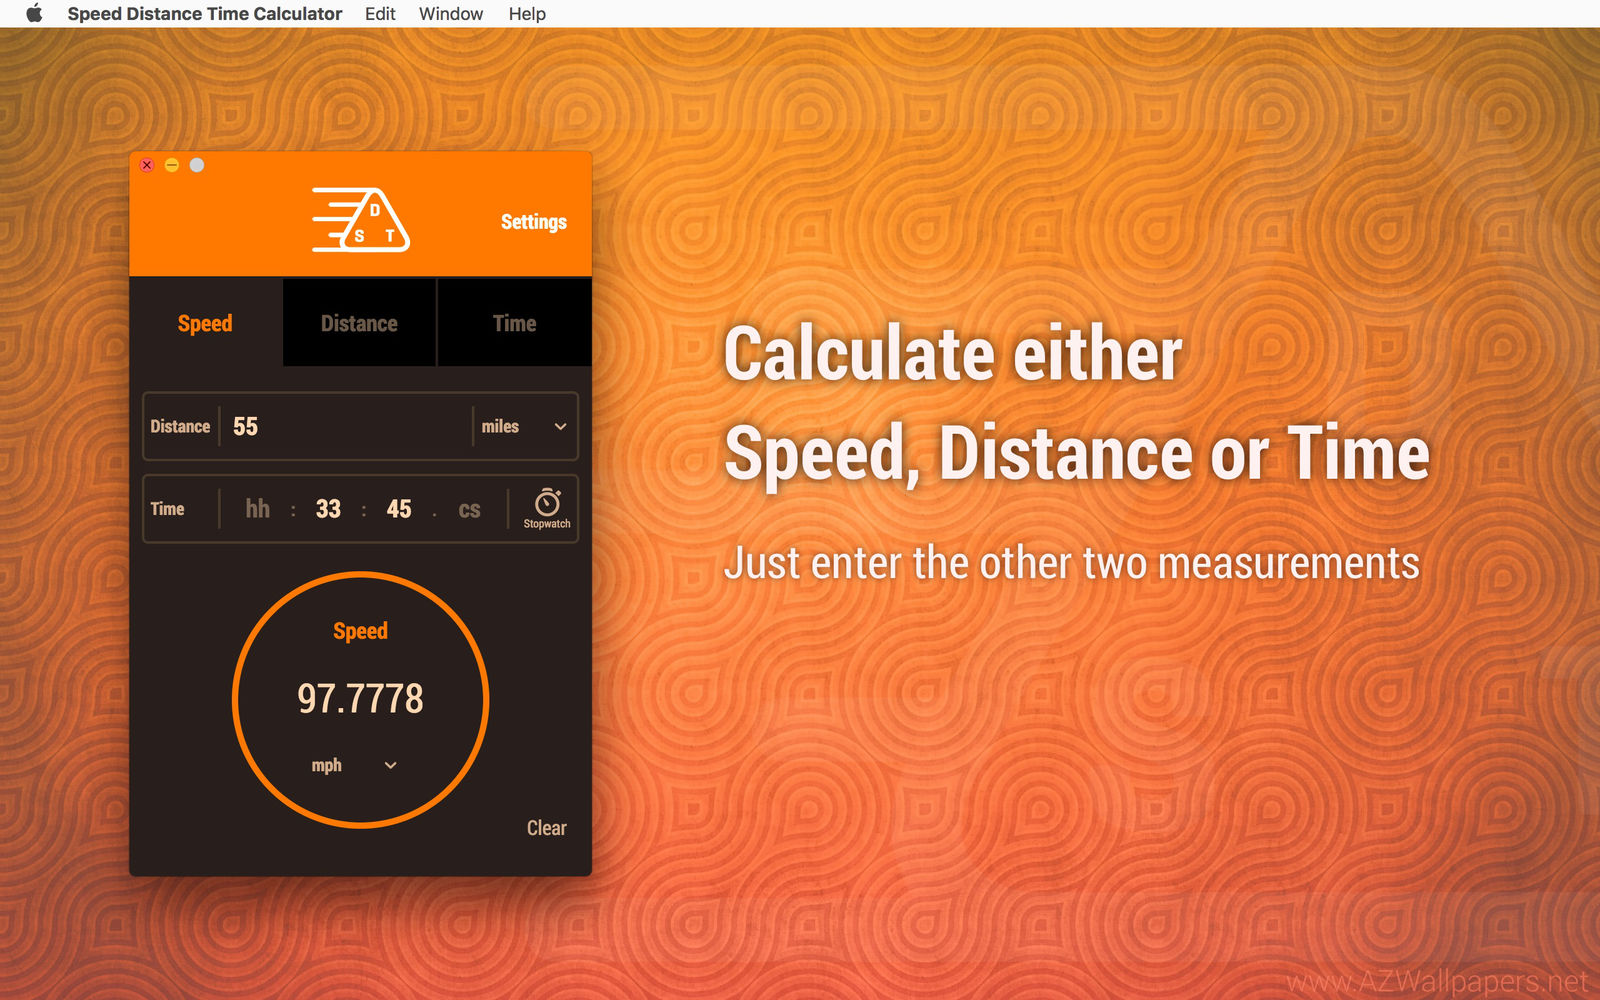 Speed Distance Time Calculator 1.7 : Main Window